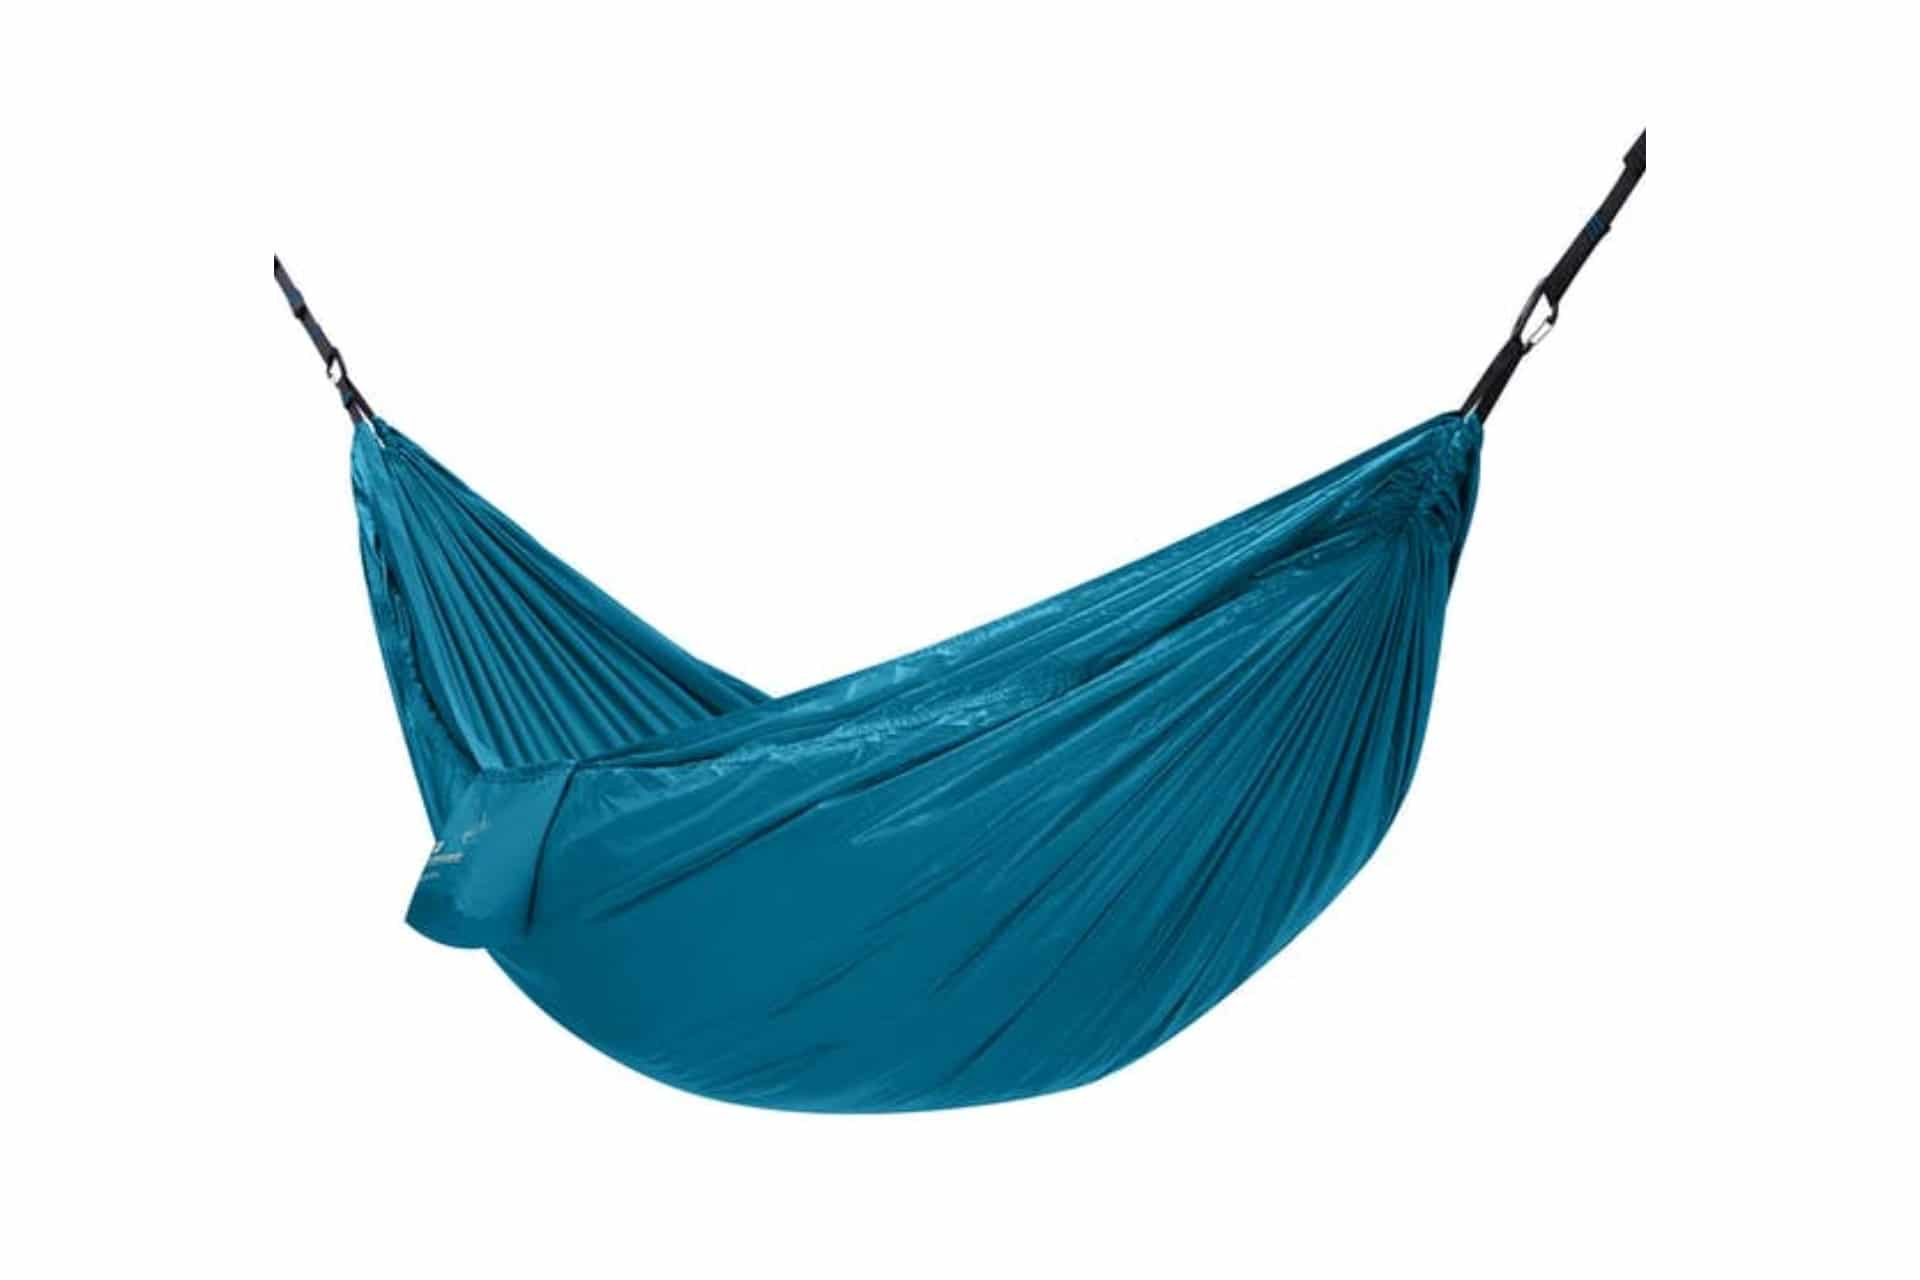 Blue hammock